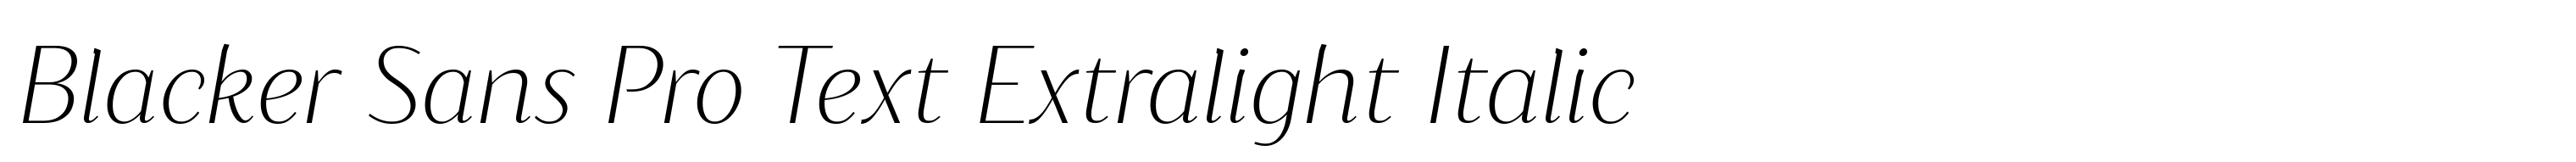 Blacker Sans Pro Text Extralight Italic